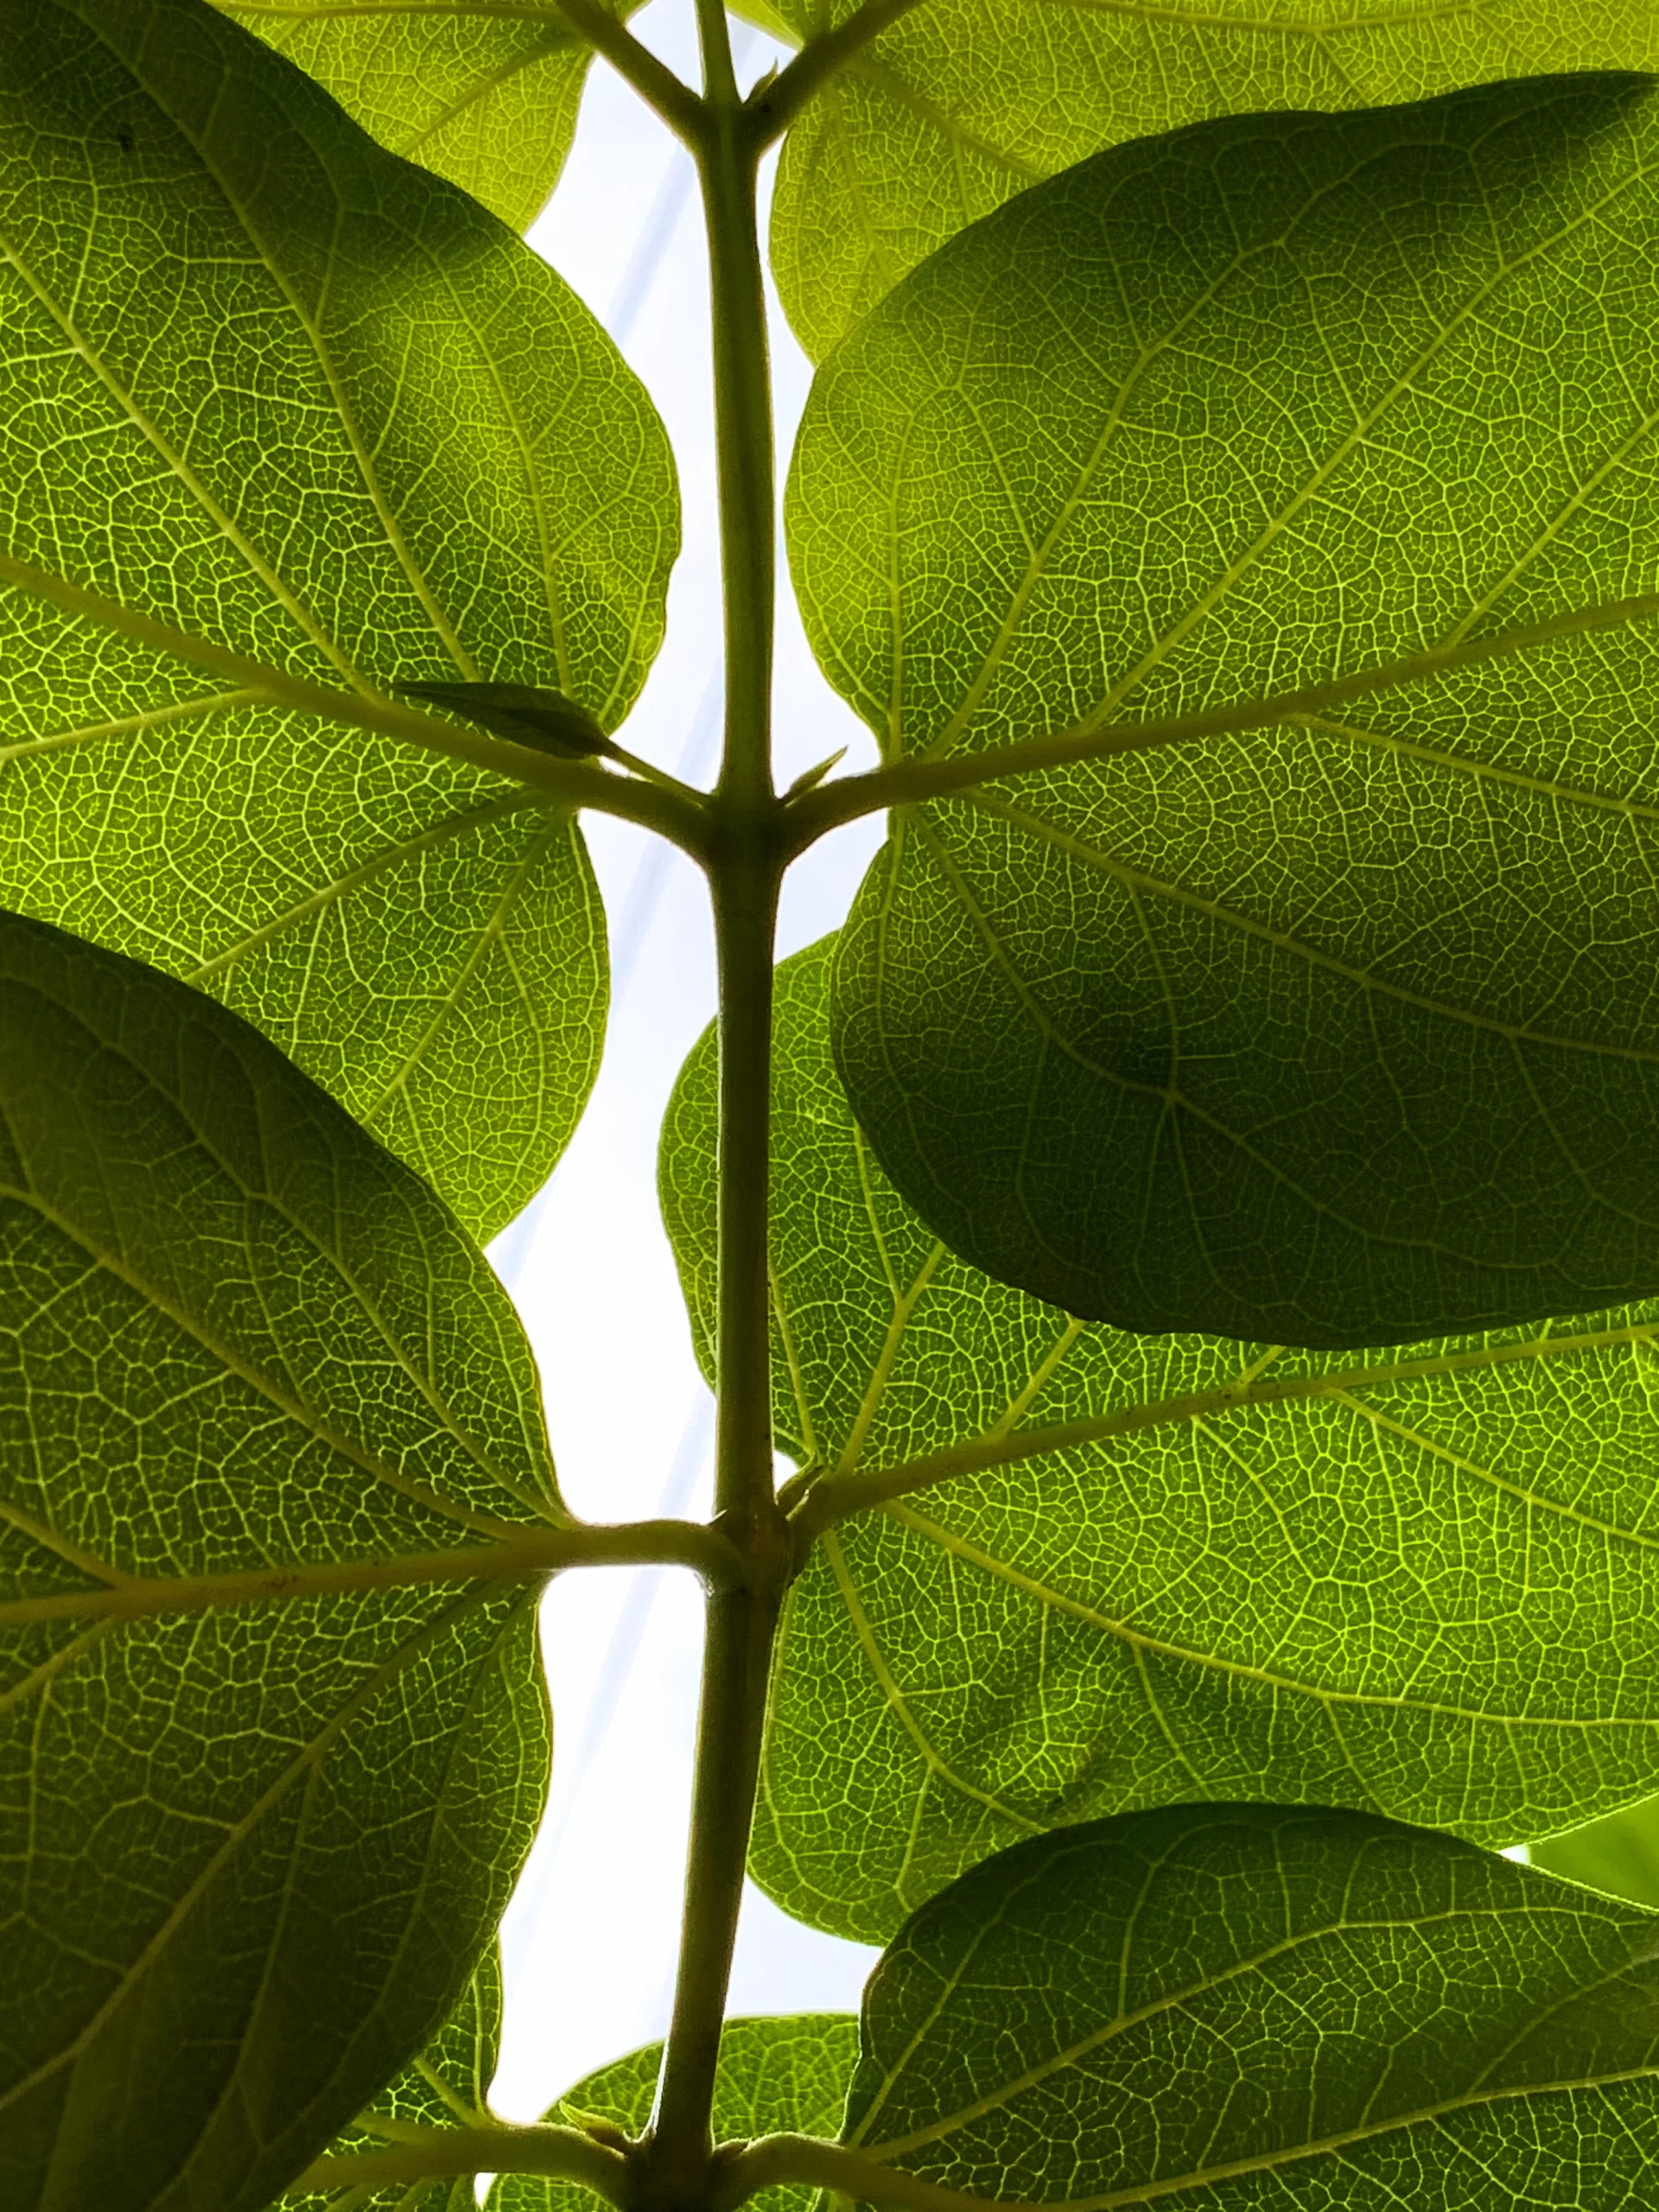 roshan-prajapati-Plant stem with detailed leaves from back-unsplash